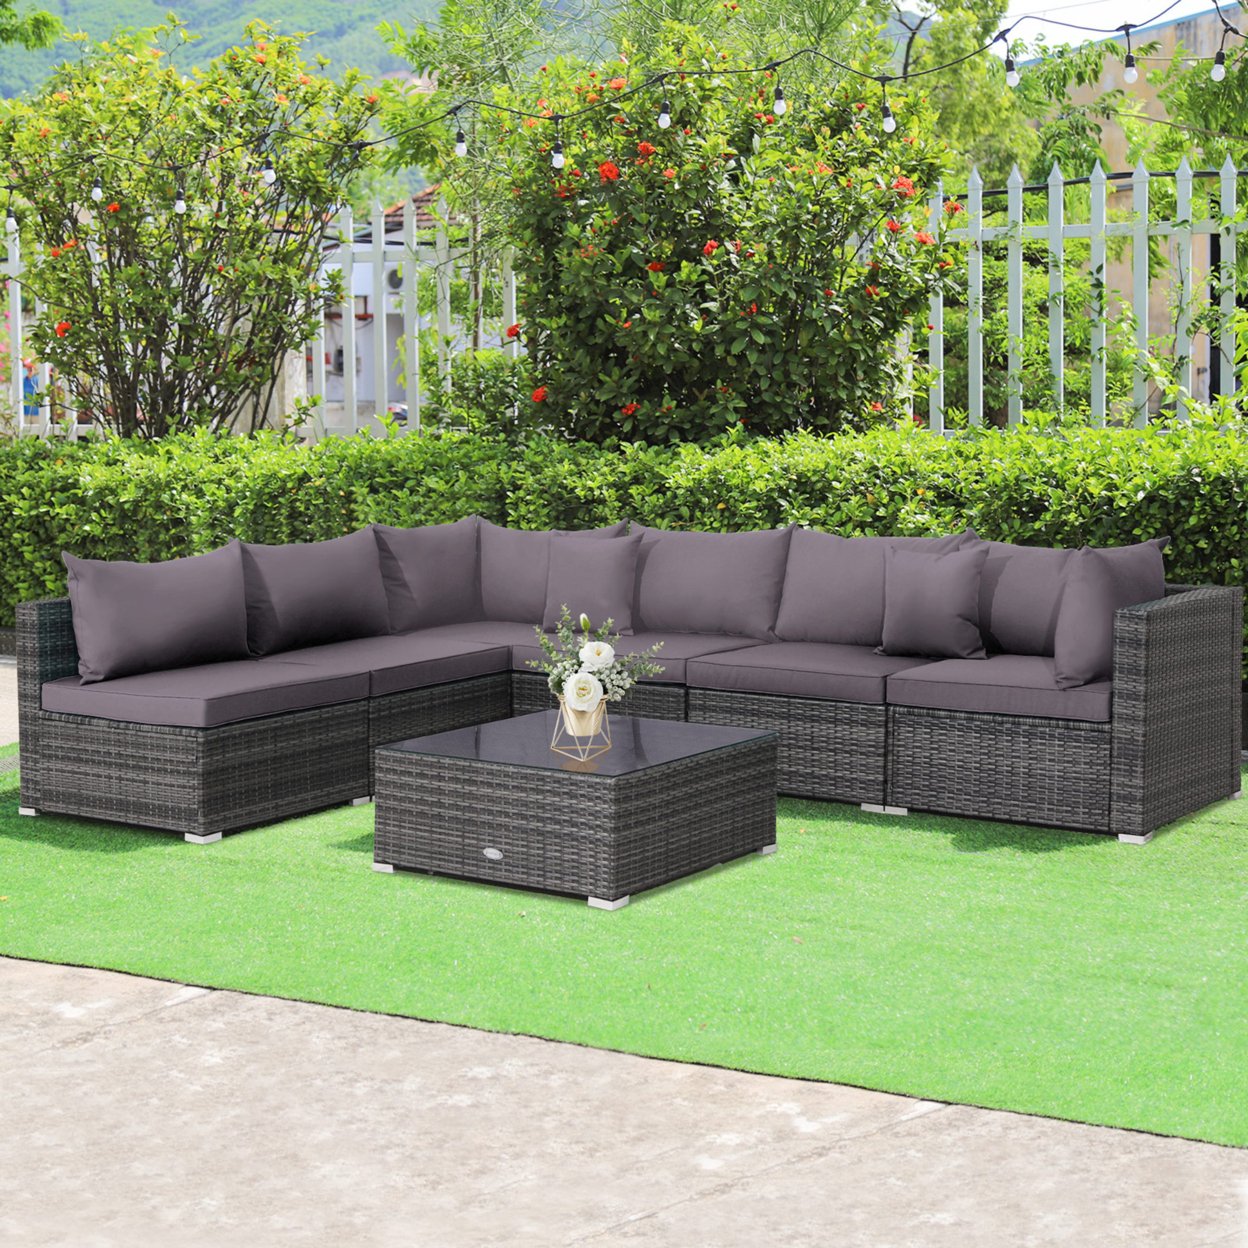 7PCS Patio Rattan Sectional Sofa Set Outdoor Furniture Set W/ Cushions - Navy